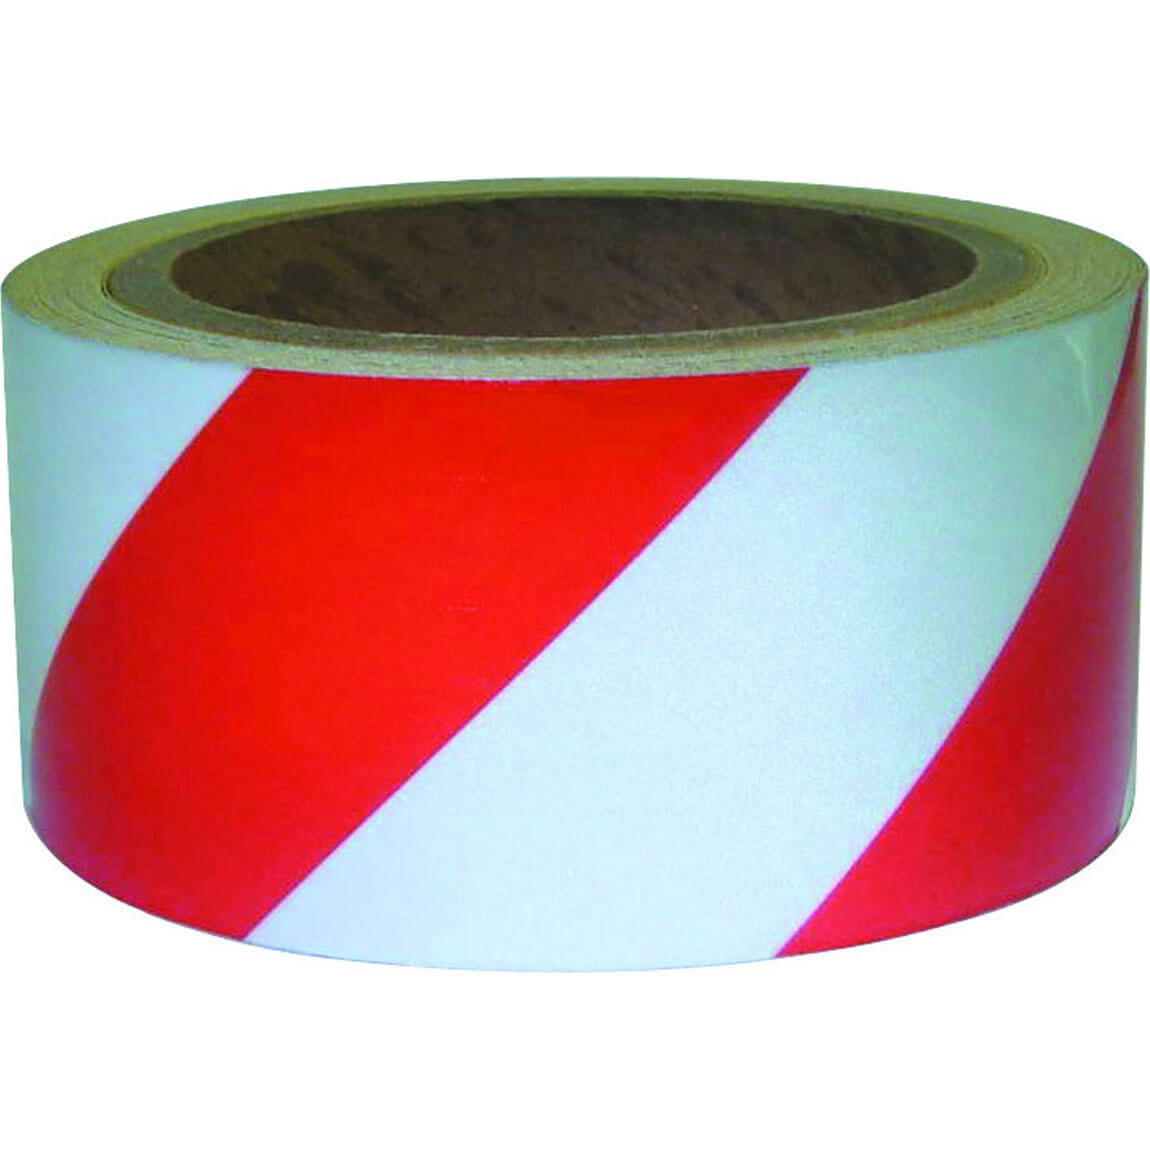 Adhesive Hazard Tape Red / White Stripe 50mm Wide x 33m Roll